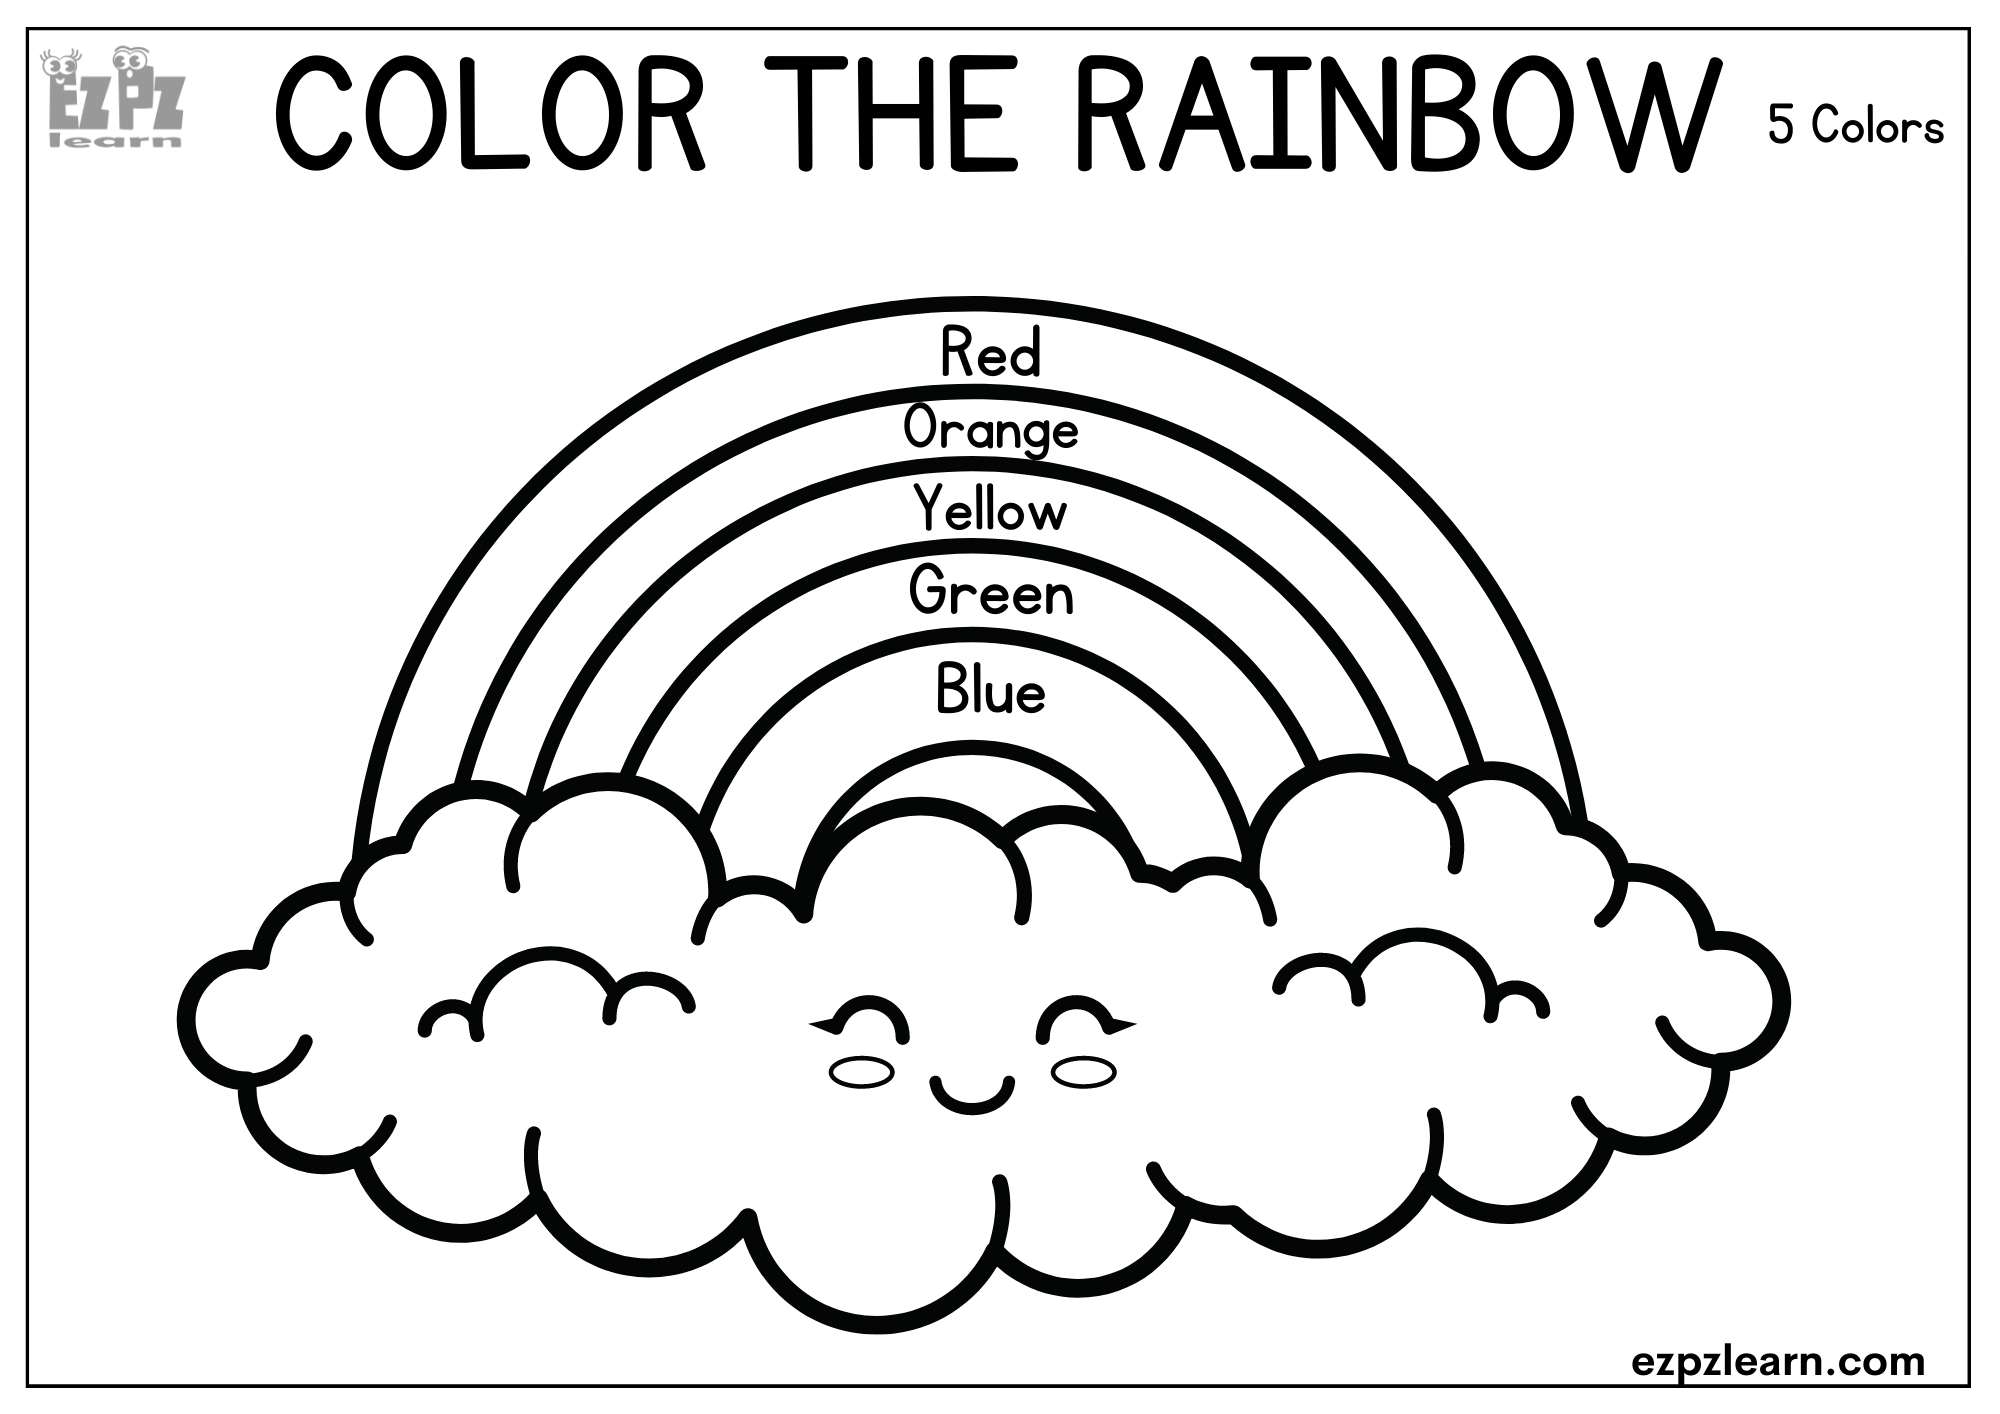 5 rainbow